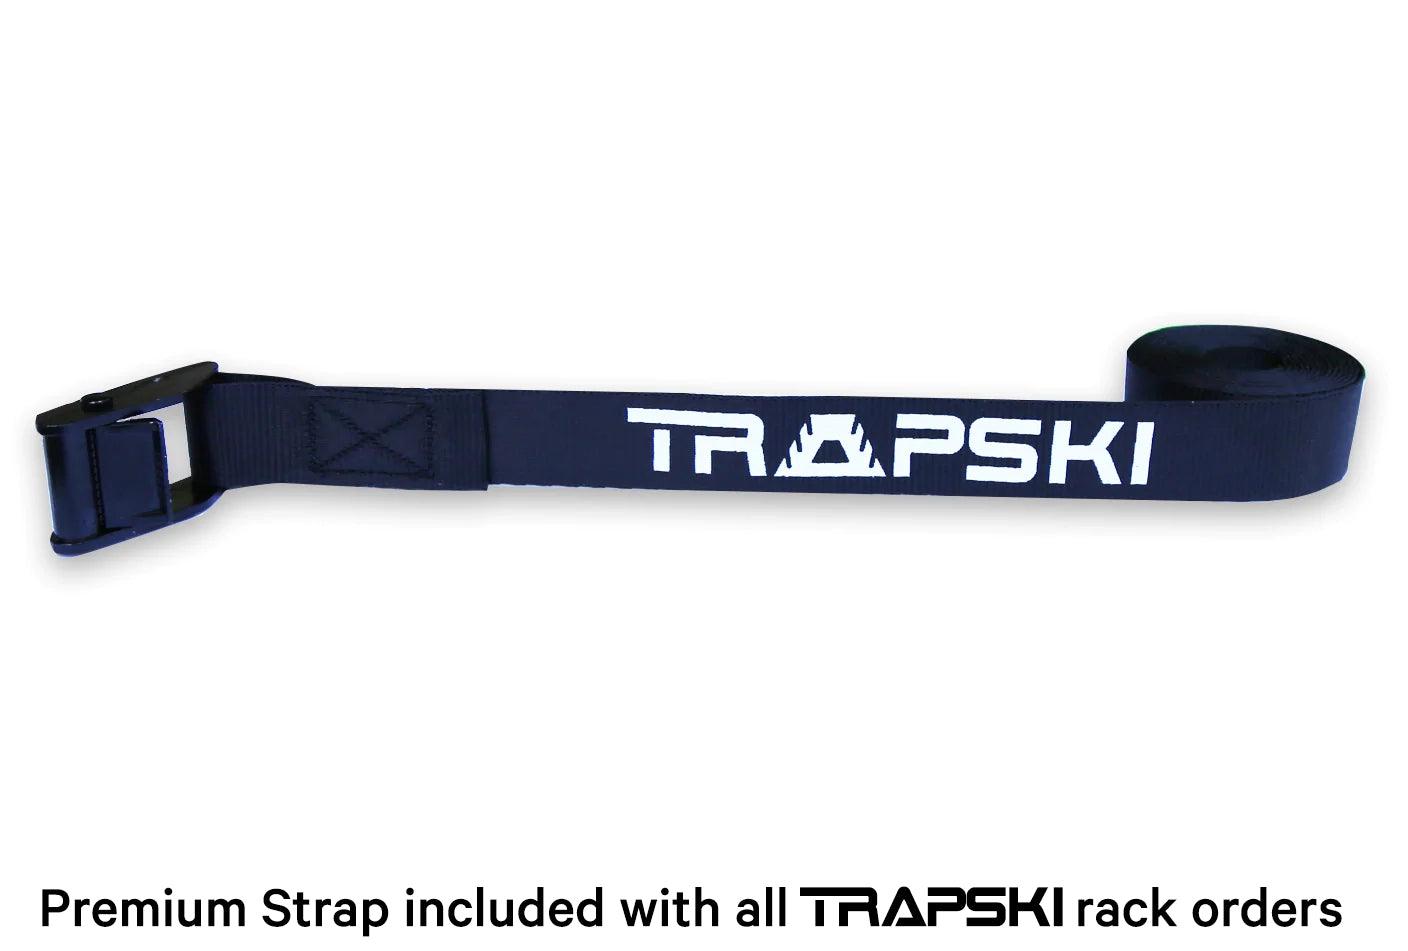 TRAPSKI SIX PACK Racing and XC Ski Rack - TRAPSKI, LLC